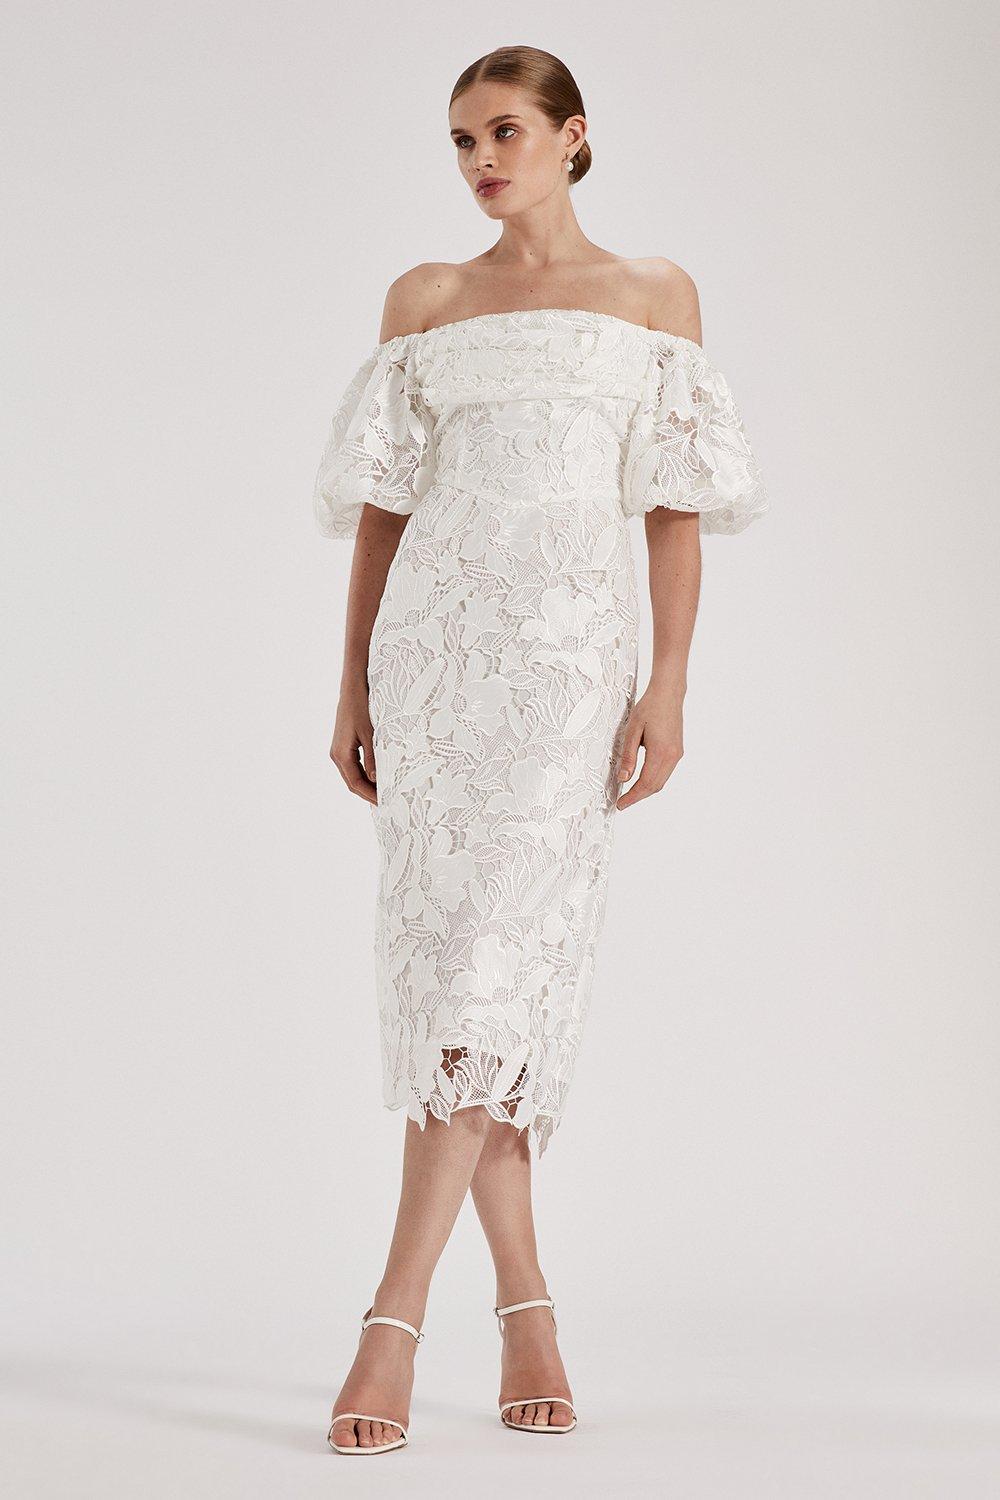 RSN Inspired Lace Bardot Dress - Ivory